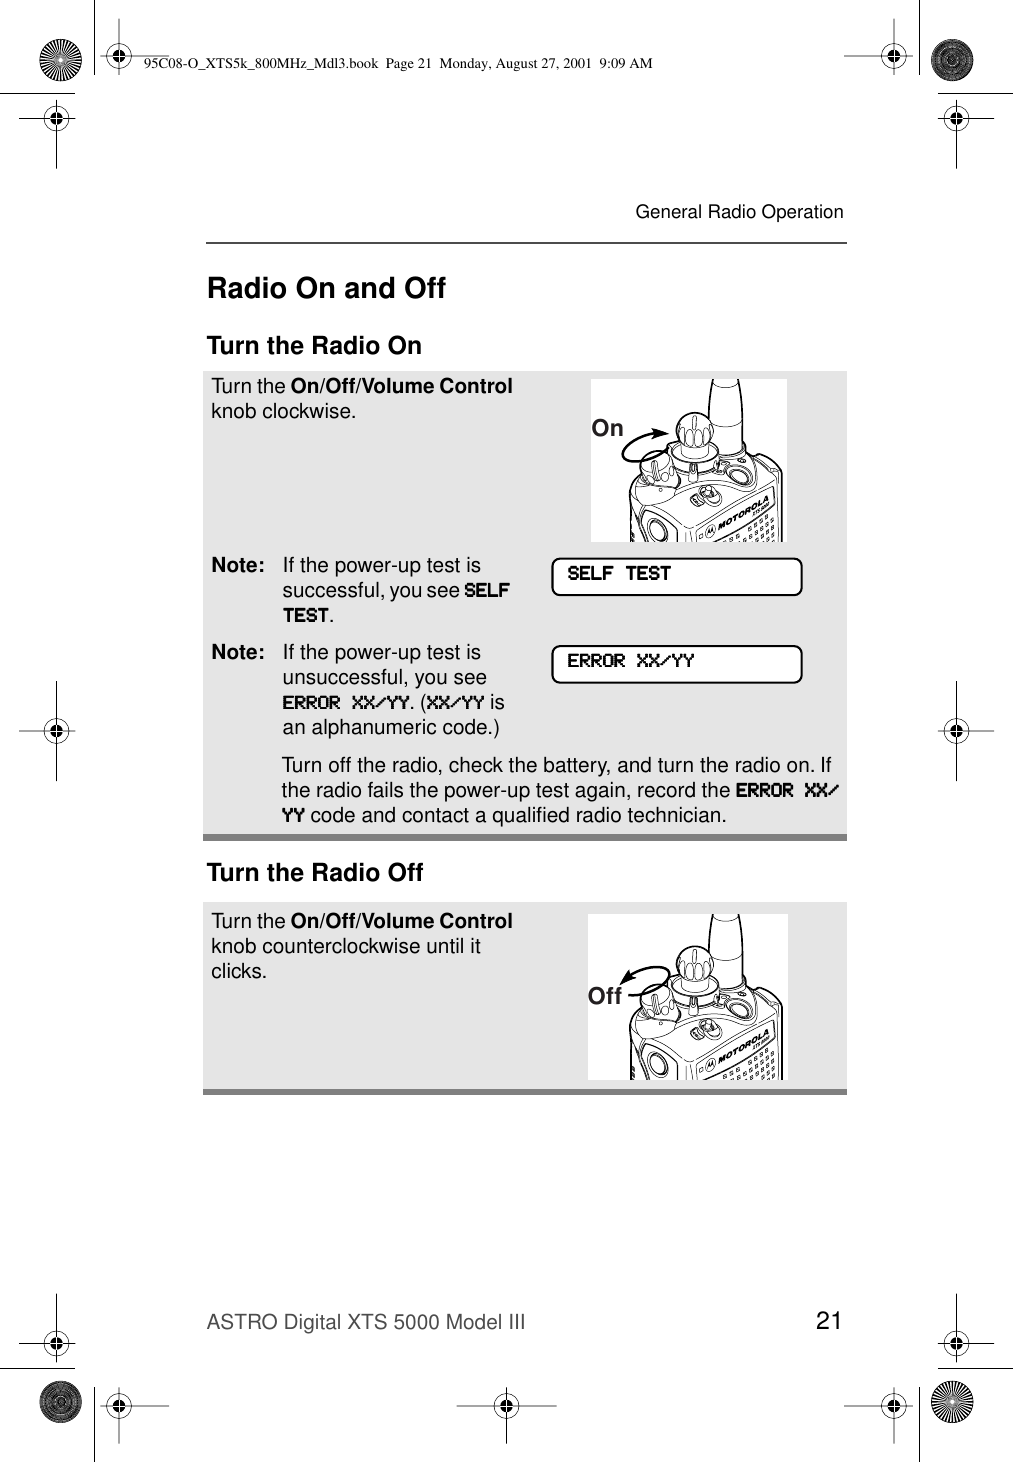 ASTRO Digital XTS 5000 Model III 21General Radio OperationRadio On and OffTurn the Radio OnTurn the Radio OffTurn the On/Off/Volume Control knob clockwise.Note: If the power-up test is successful, you see SSSSEEEELLLLFFFF    TTTTEEEESSSSTTTT.Note: If the power-up test is unsuccessful, you see EEEERRRRRRRROOOORRRR    XXXXXXXX////YYYYYYYY. (XXXXXXXX////YYYYYYYY is an alphanumeric code.) Turn off the radio, check the battery, and turn the radio on. If the radio fails the power-up test again, record the EEEERRRRRRRROOOORRRR    XXXXXXXX////YYYYYYYY code and contact a qualiﬁed radio technician.Turn the On/Off/Volume Control knob counterclockwise until it clicks.OnSSSSEEEELLLLFFFF    TTTTEEEESSSSTTTTEEEERRRRRRRROOOORRRR    XXXXXXXX////YYYYYYYYOff95C08-O_XTS5k_800MHz_Mdl3.book  Page 21  Monday, August 27, 2001  9:09 AM